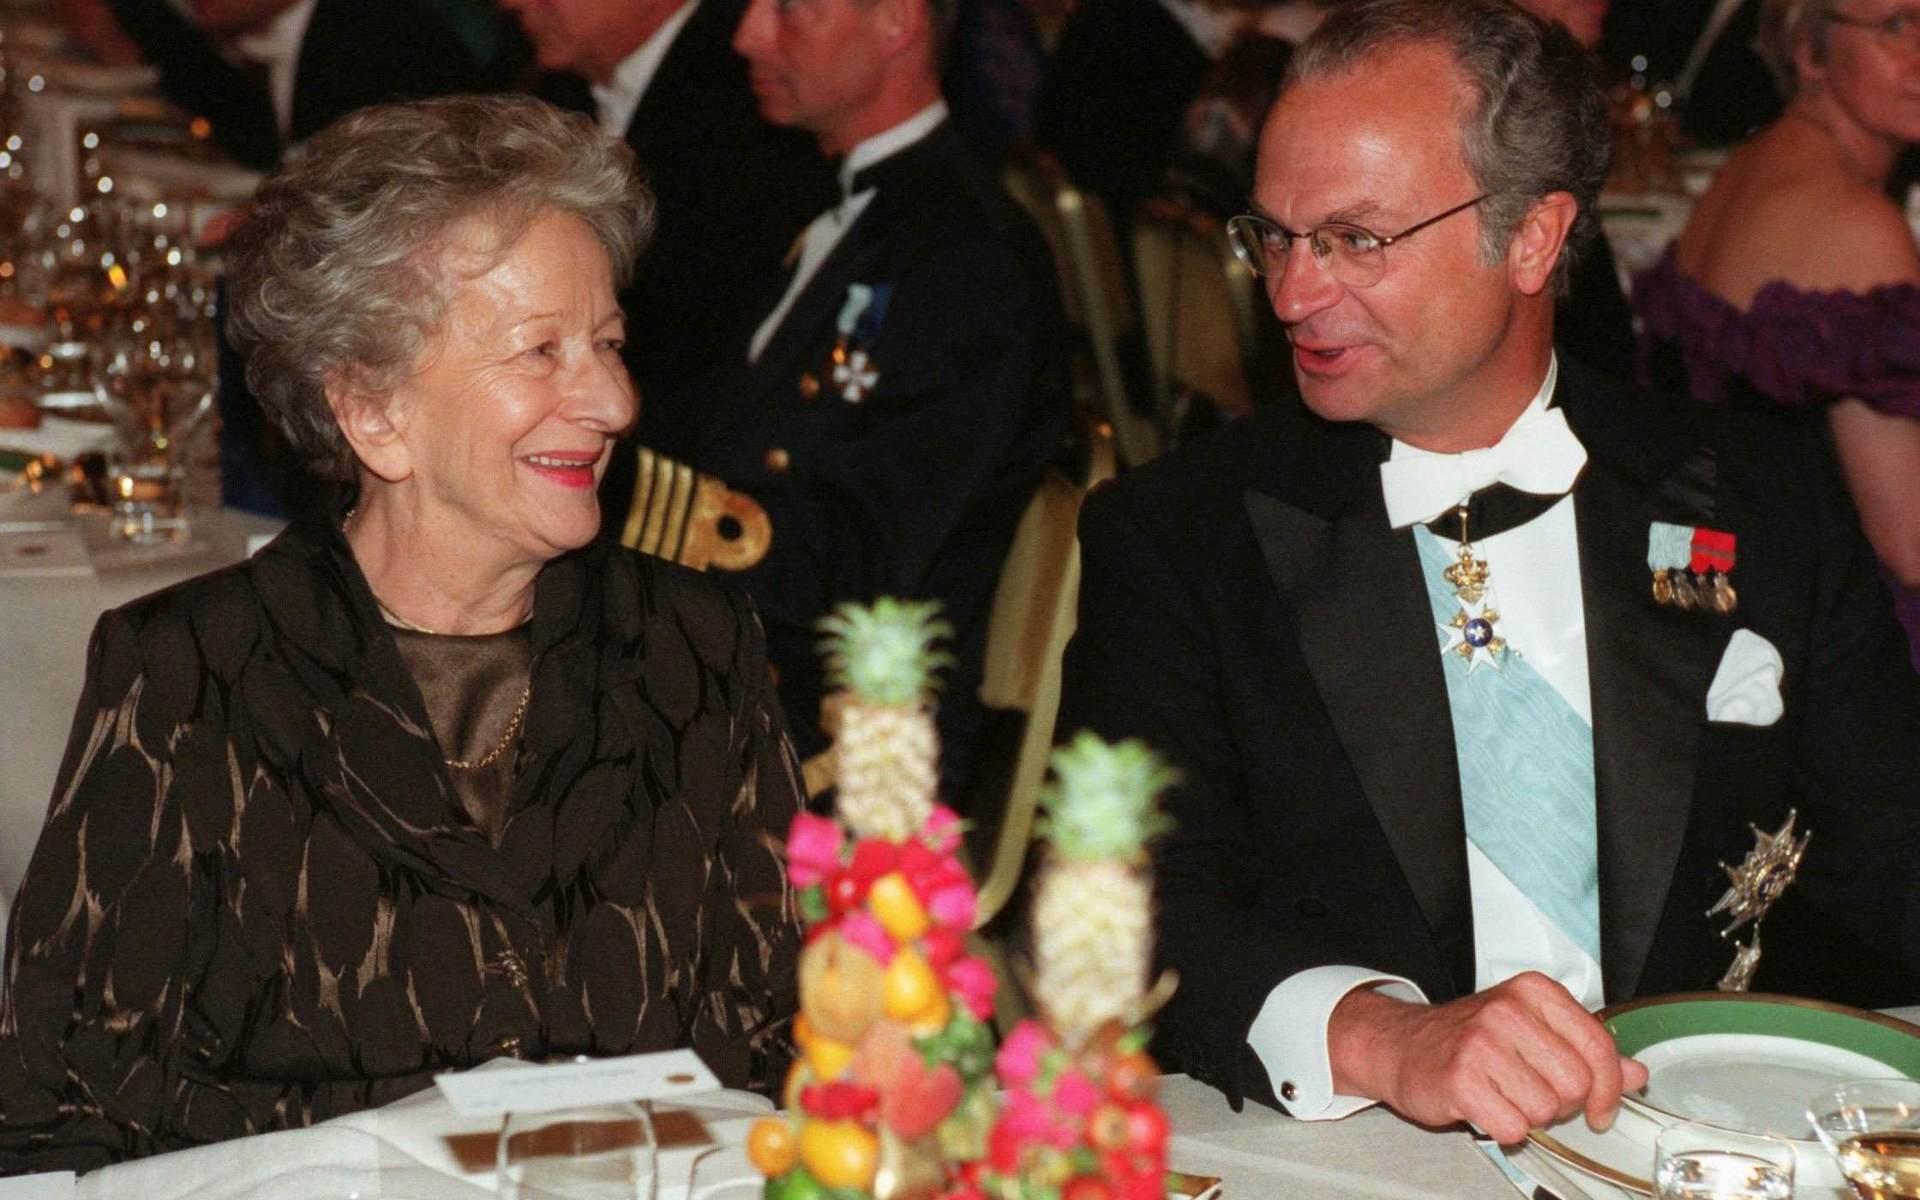 1996. Wislawa Szymborska, Polen, och Carl XVI Gustaf på Nobelfesten.